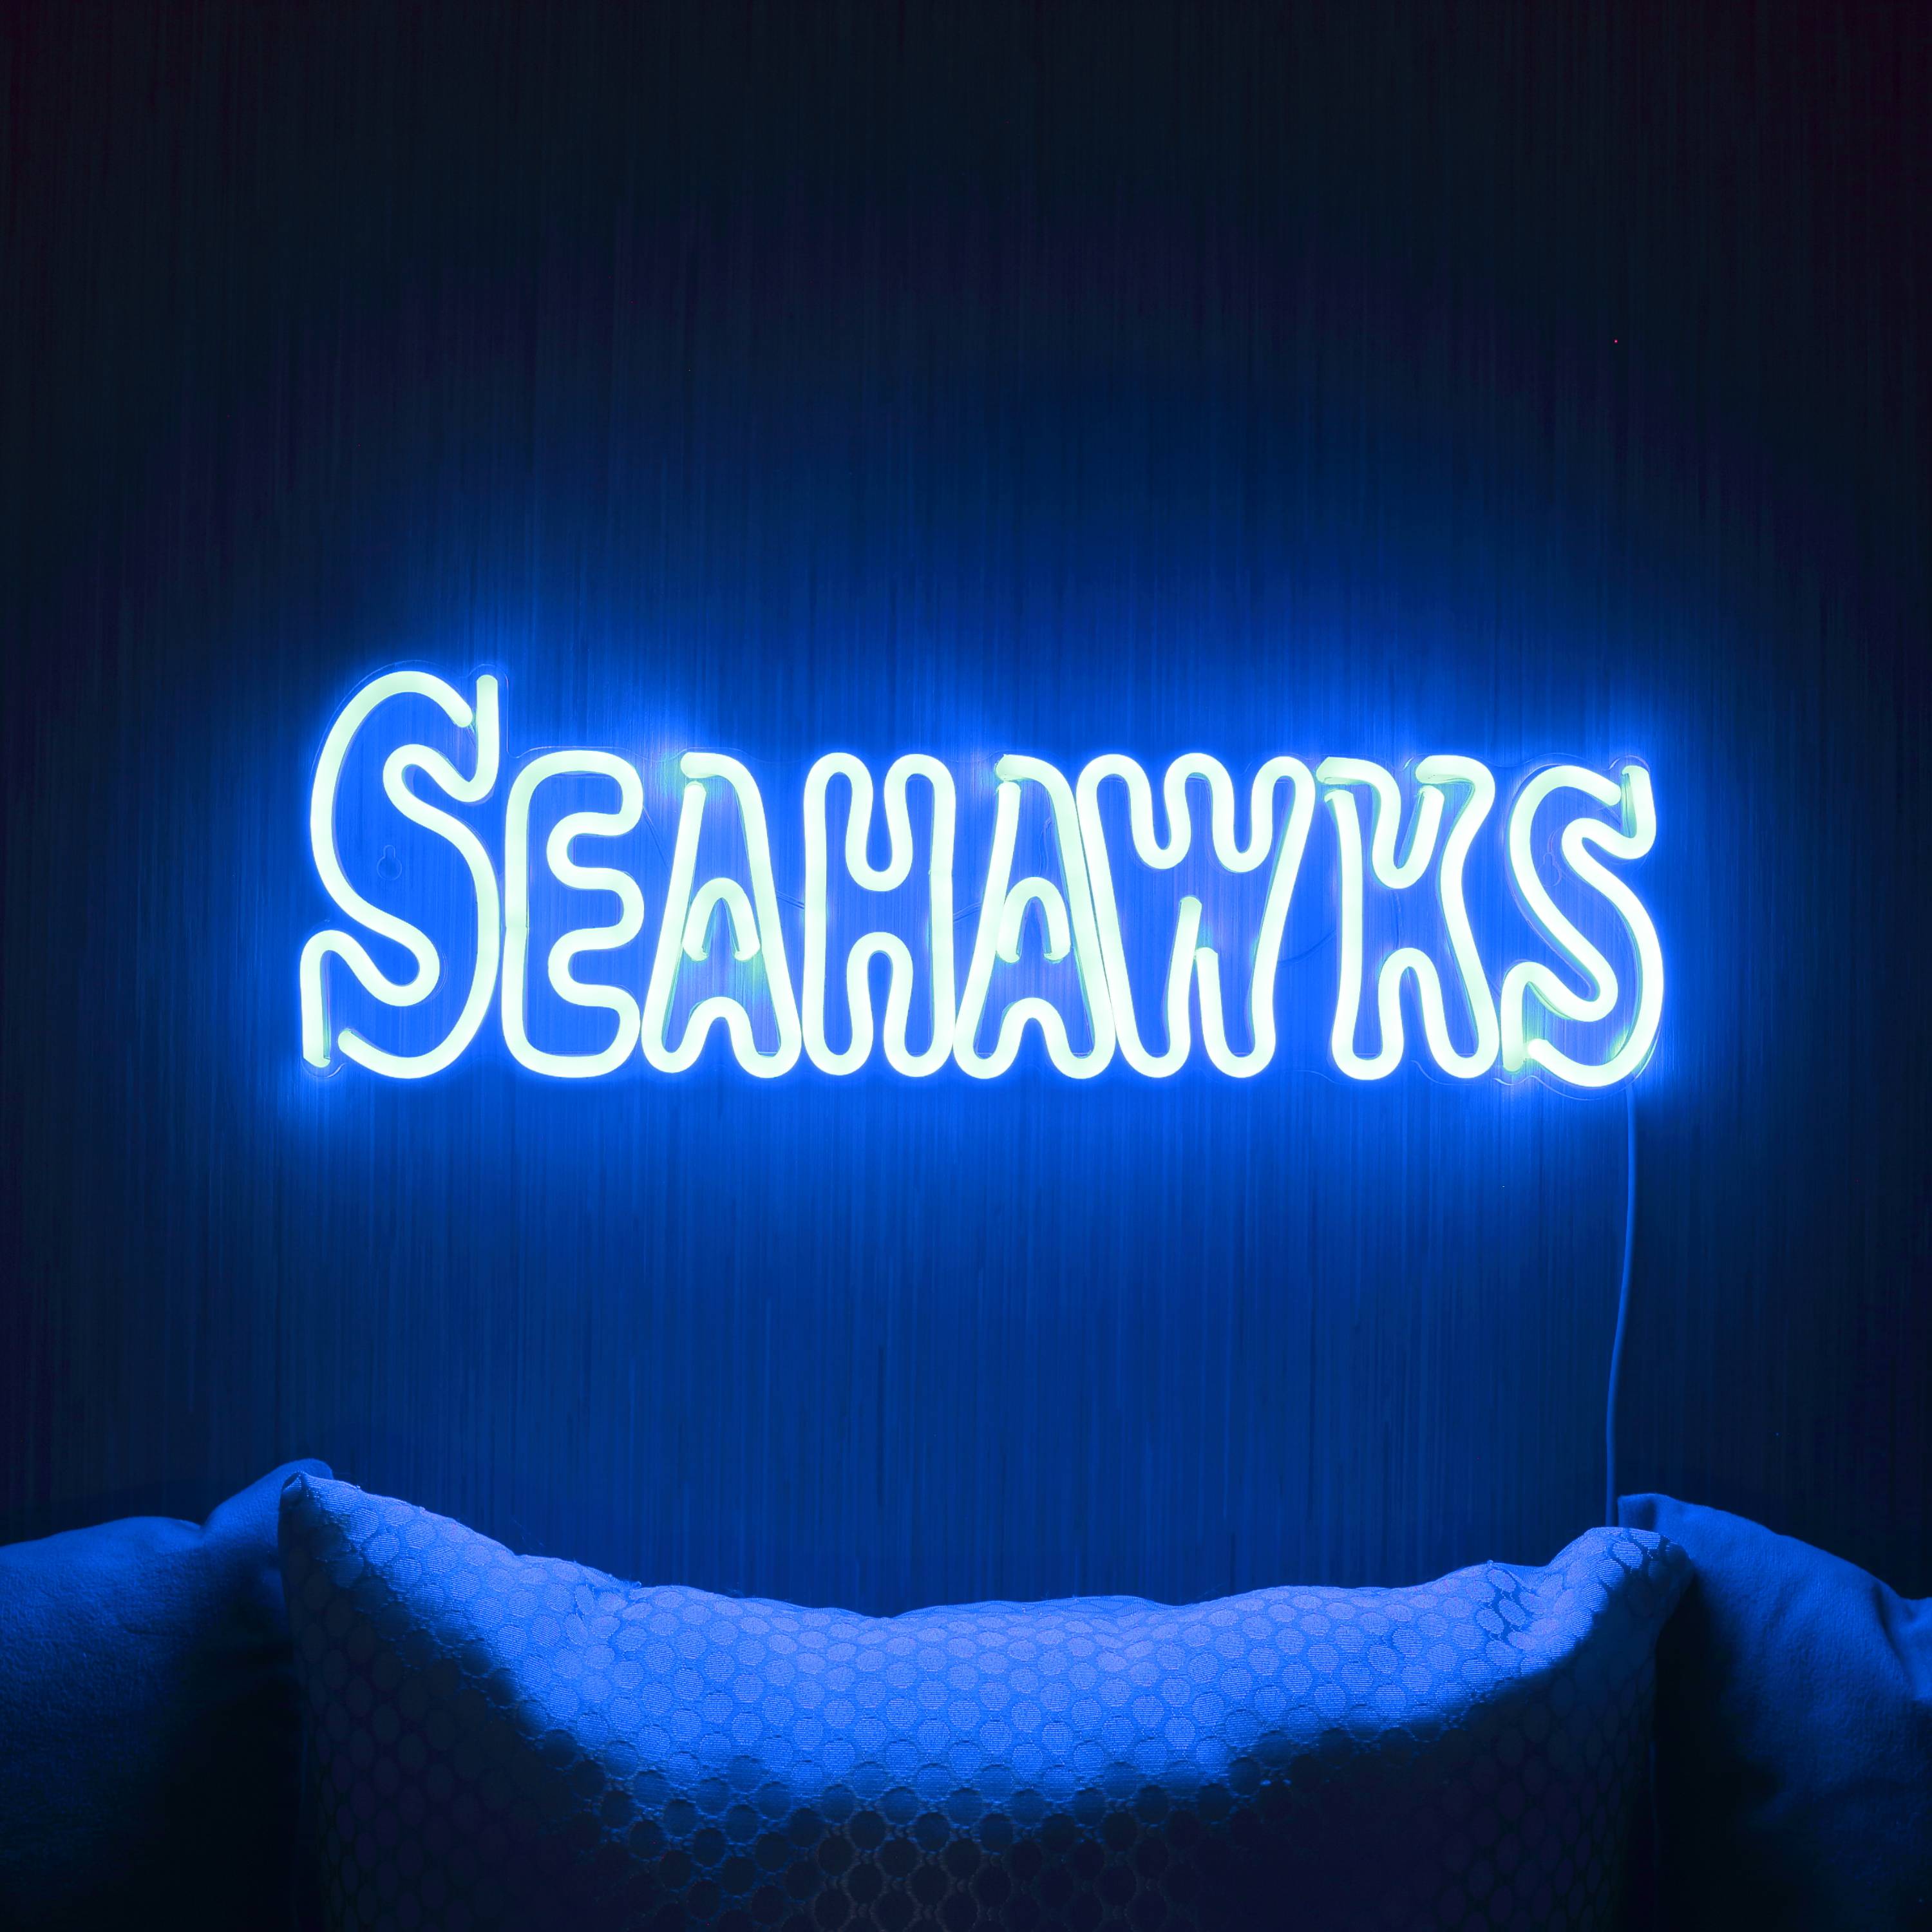 NFL SEAHAWKS Large Flex Neon LED Sign